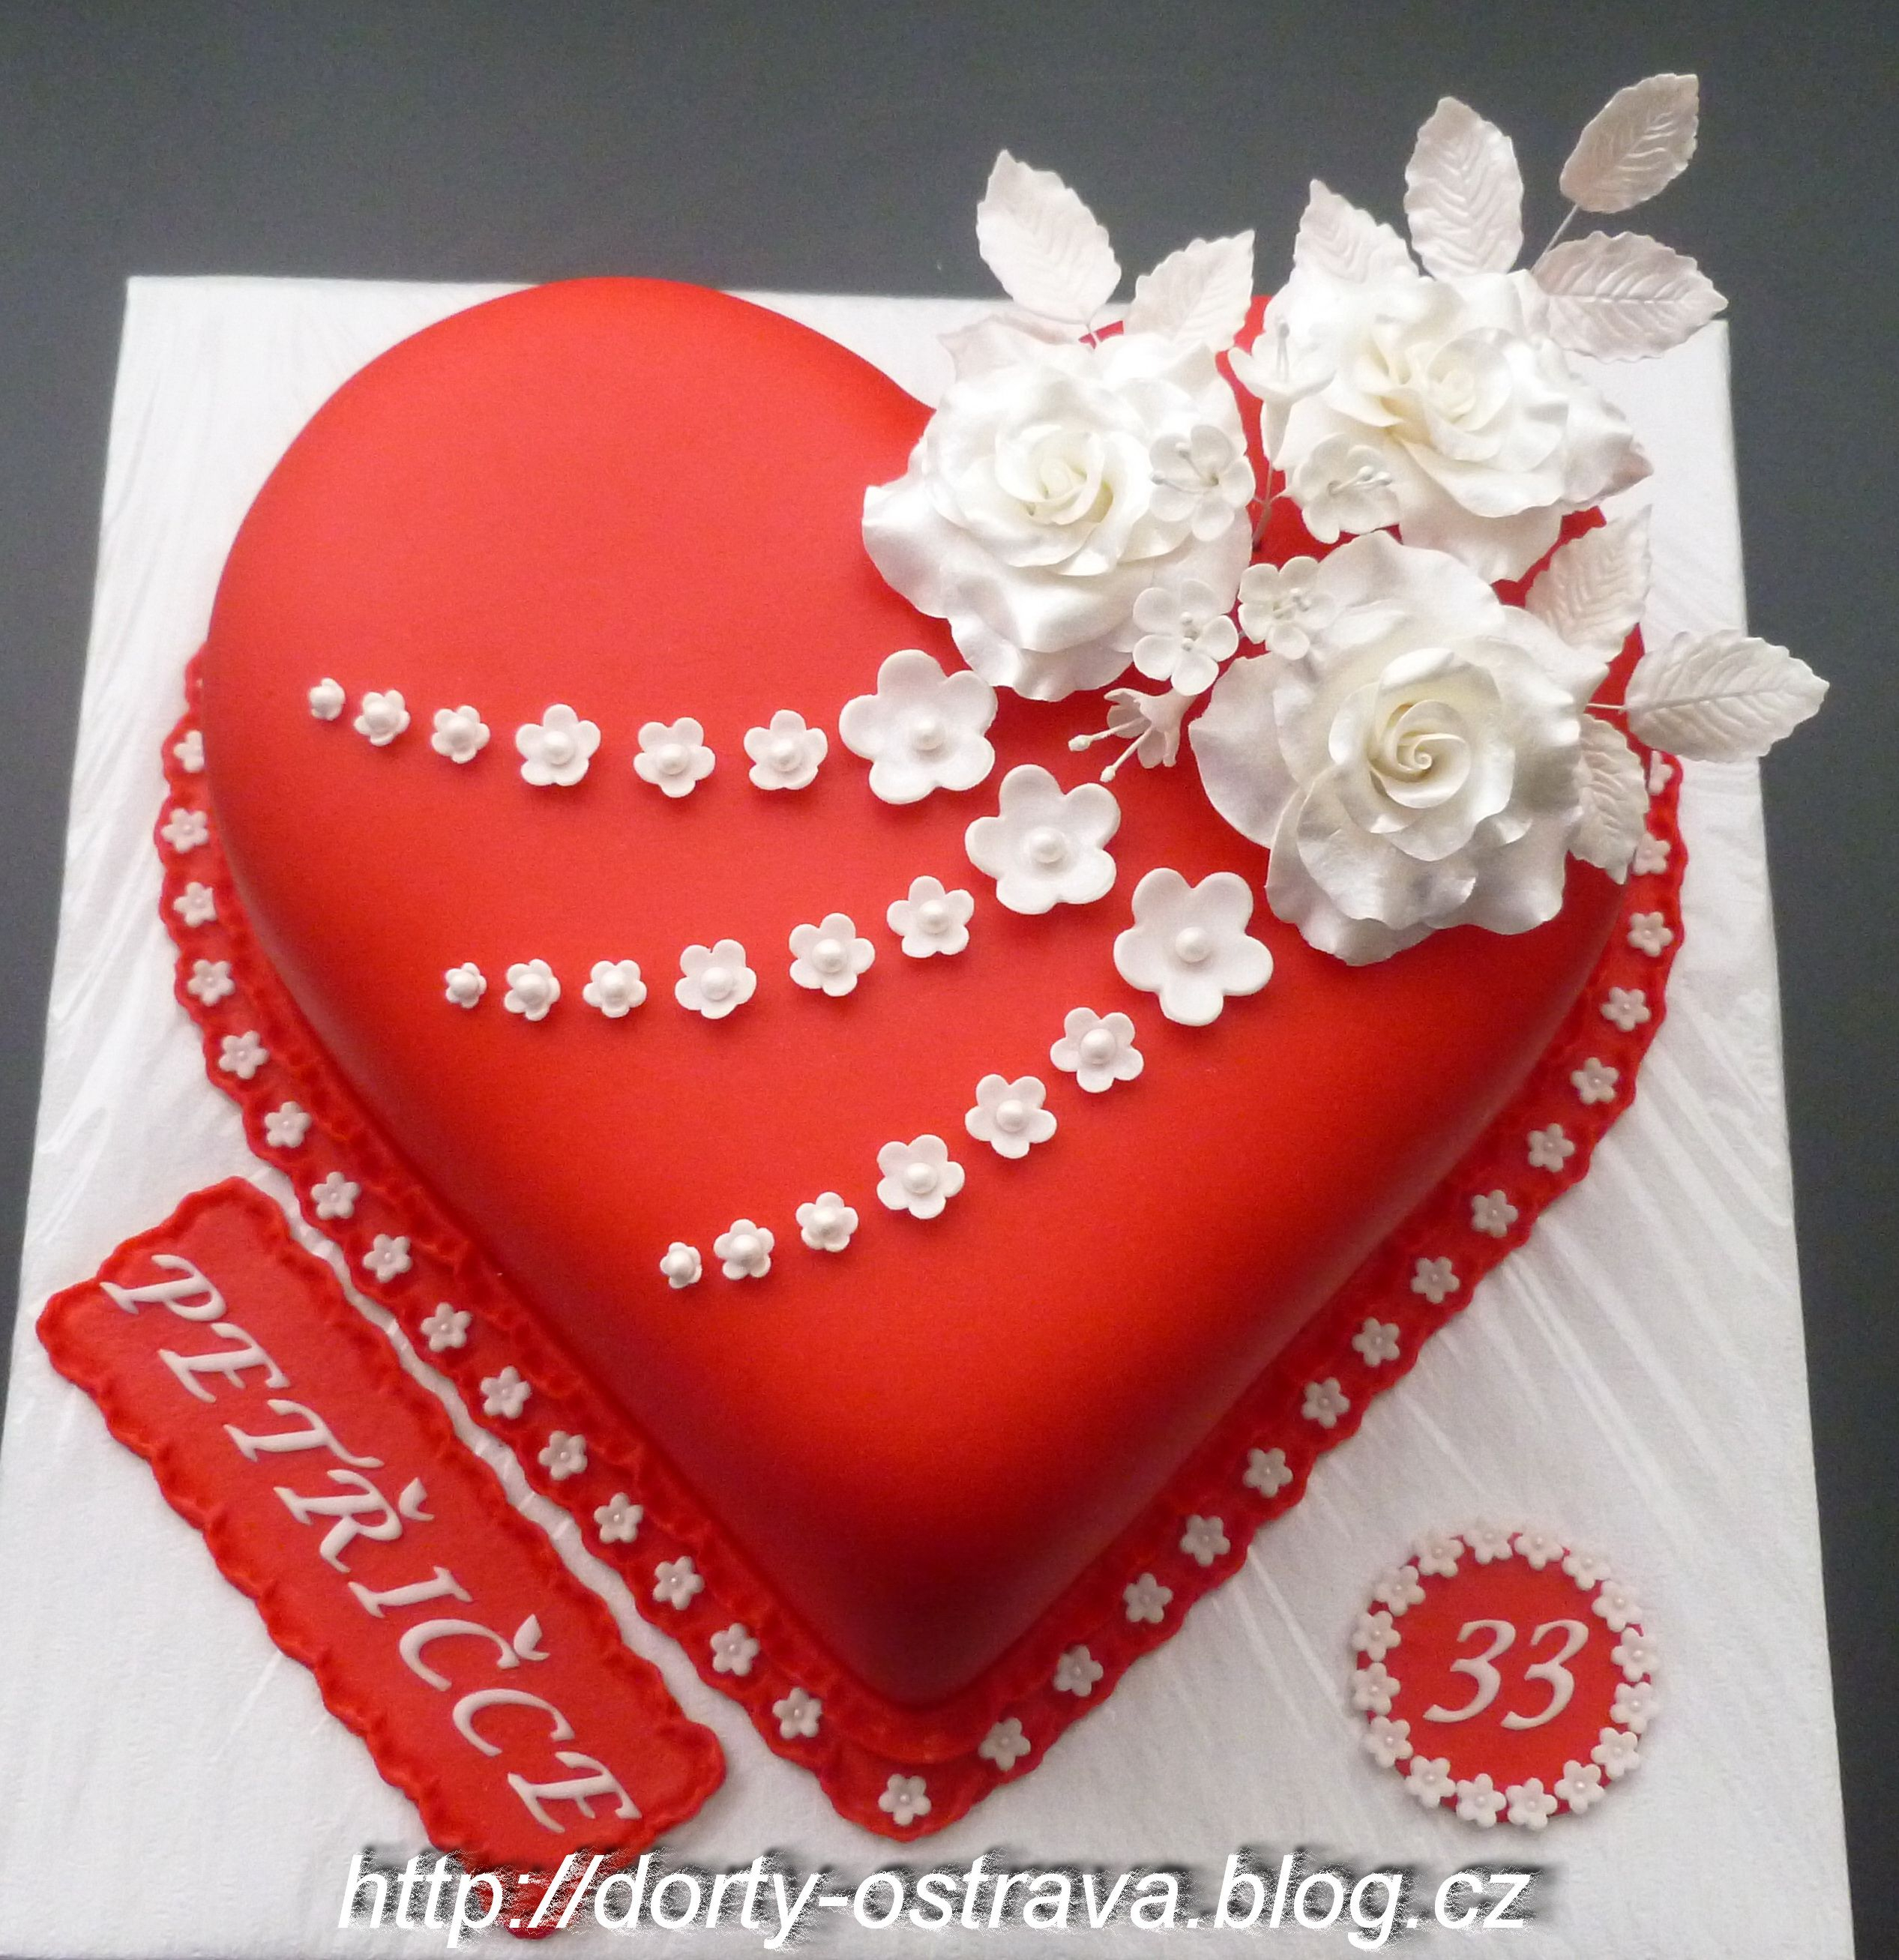 Heart Birthday Cake Birthday Cake Photos Cakes Sheetcakes Layers Pinterest